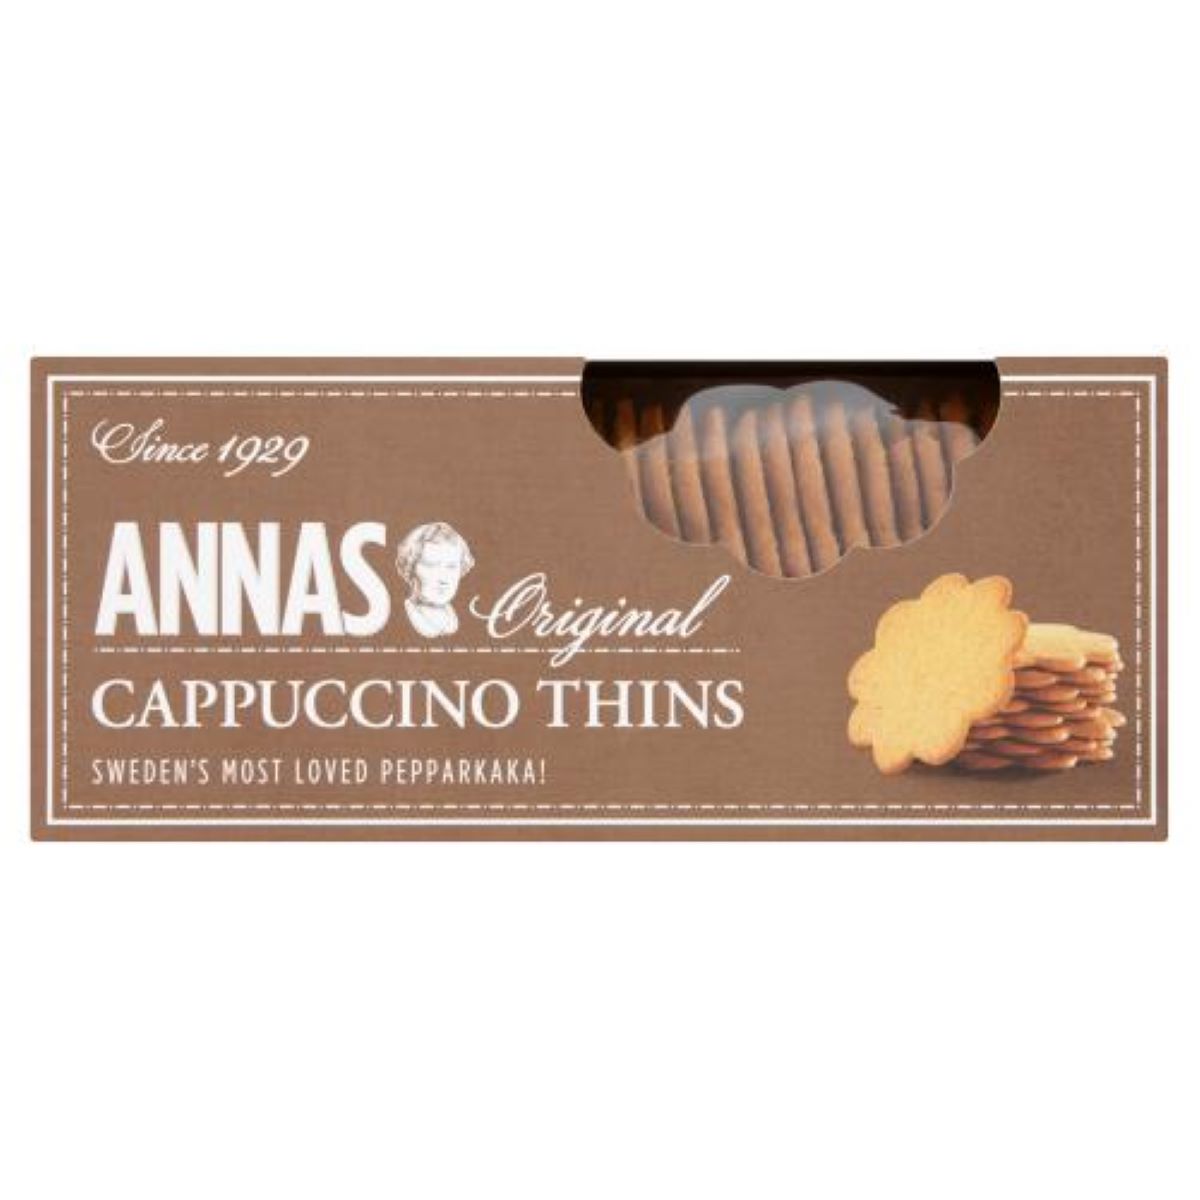 Annas Original Cappuccino Thins 150g